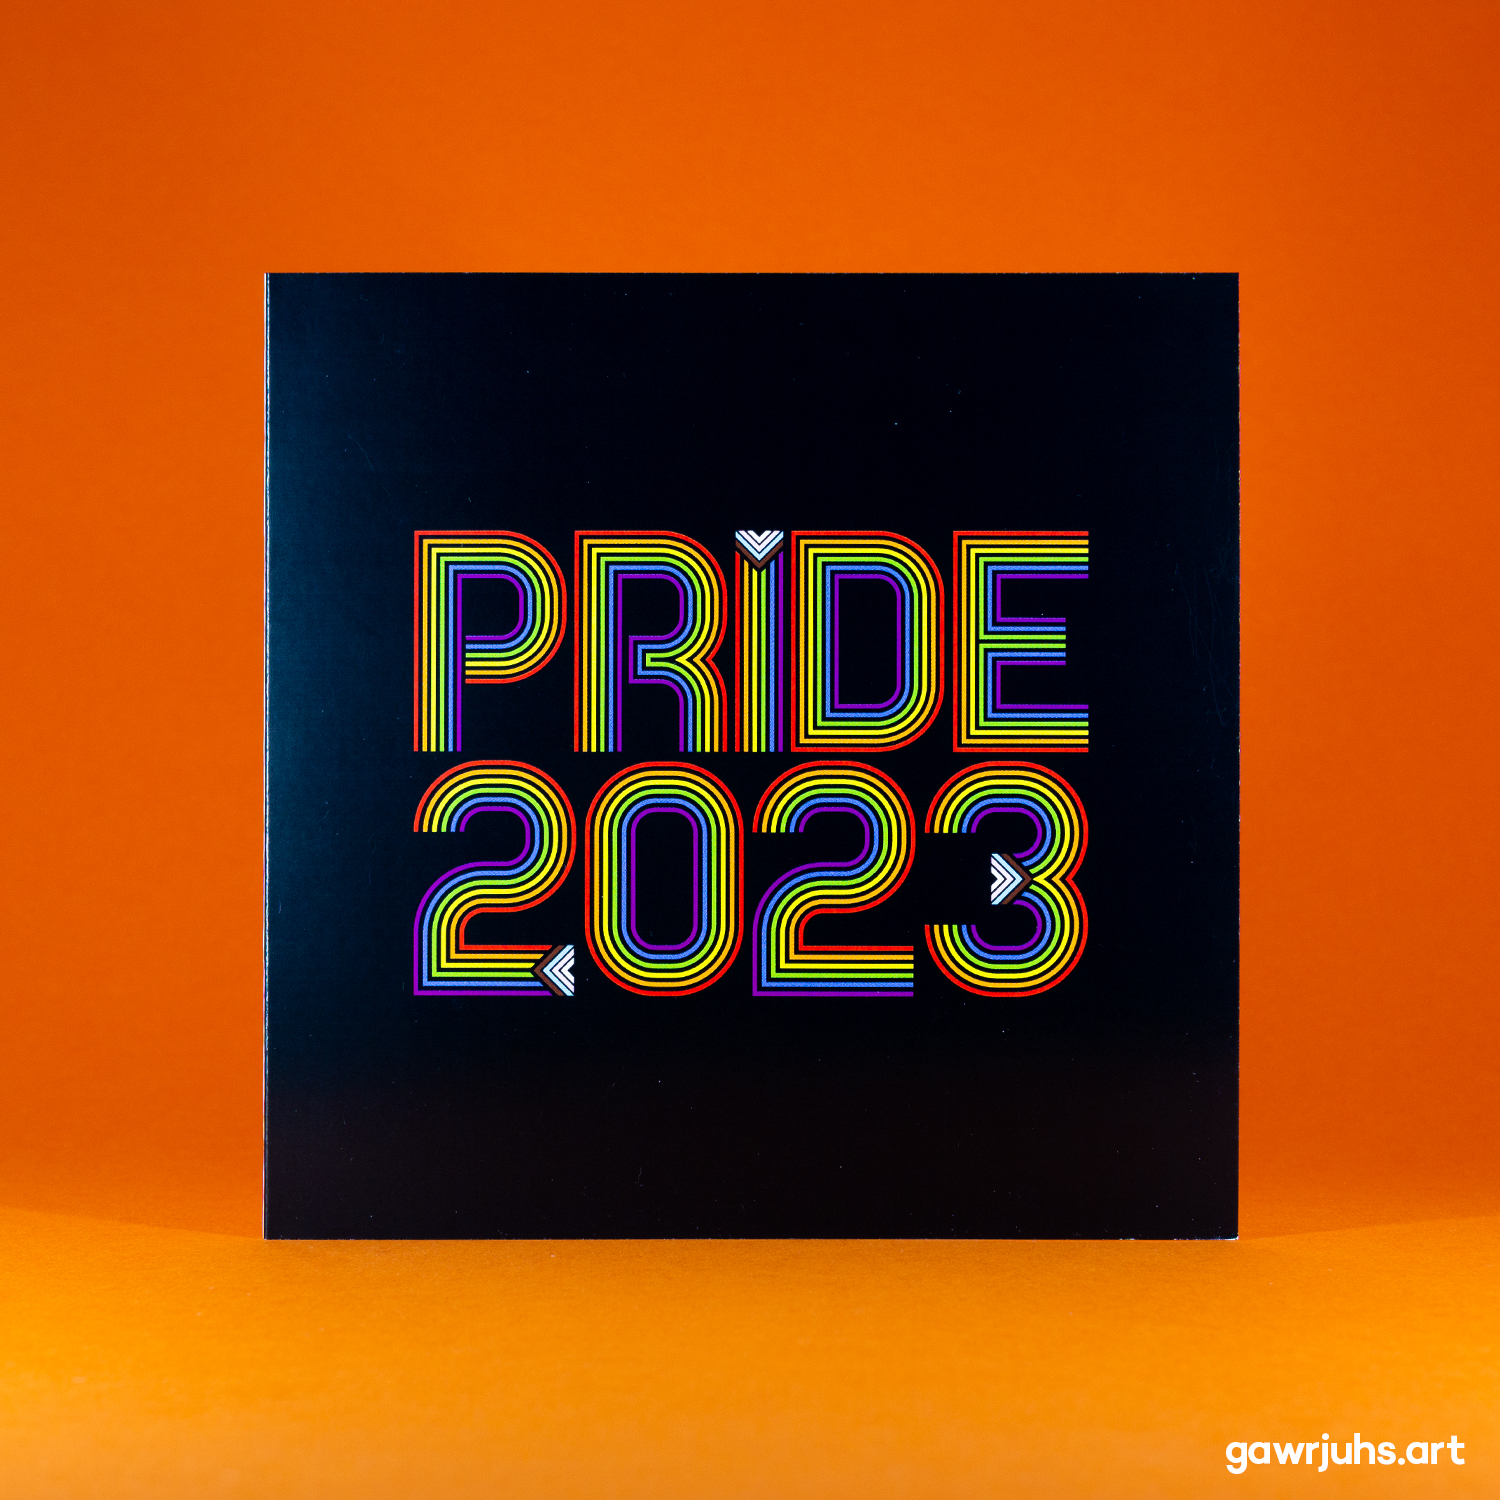 pride-2023-card-orange-background-1500px